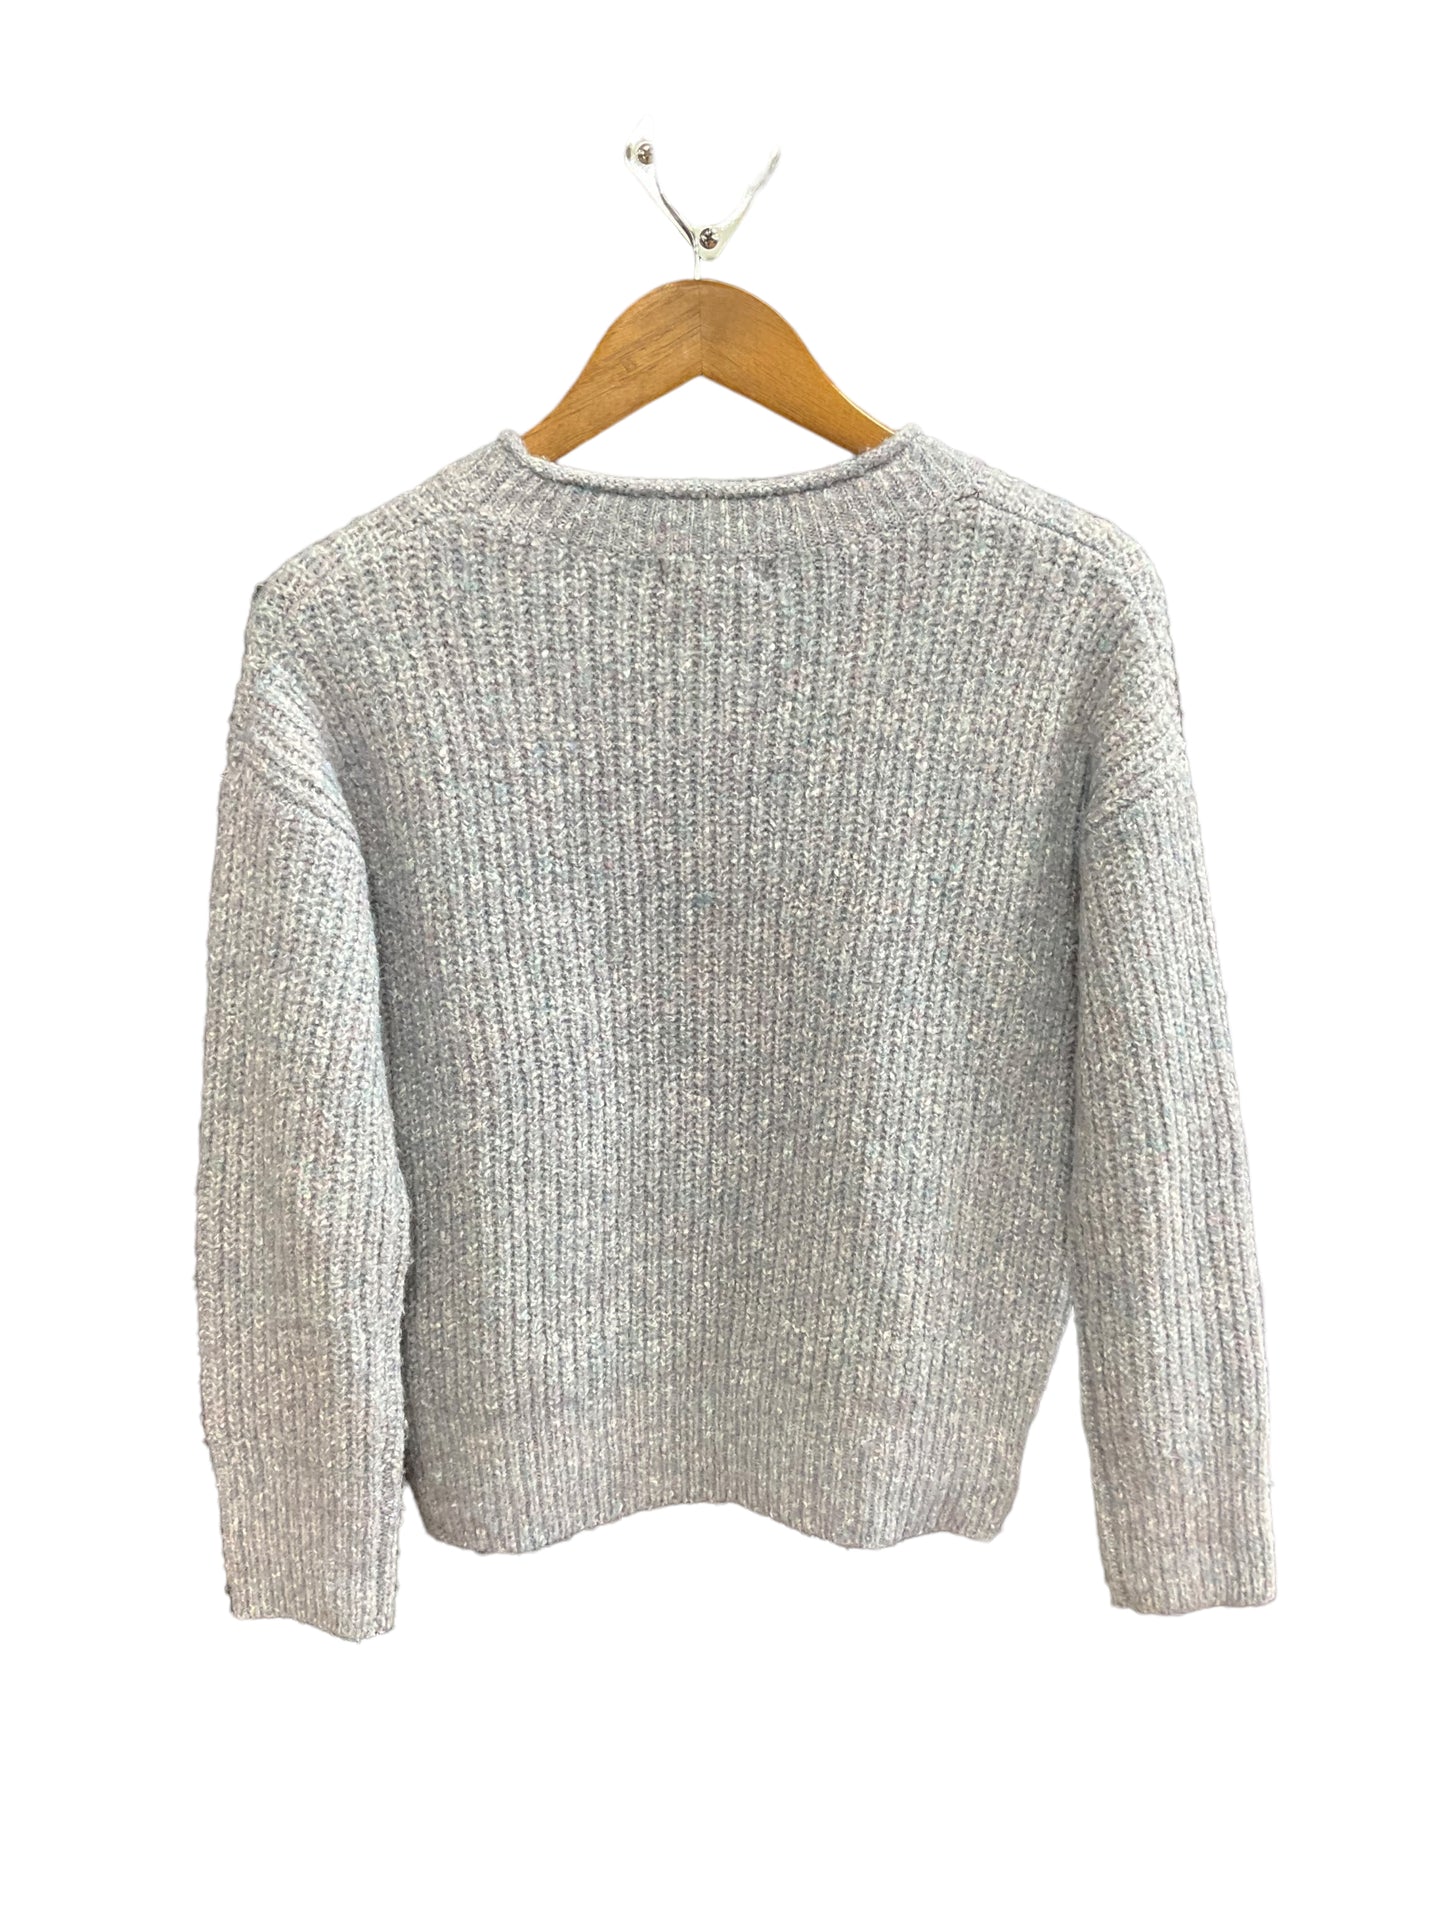 Sweater By Rachel Roy  Size: Xs